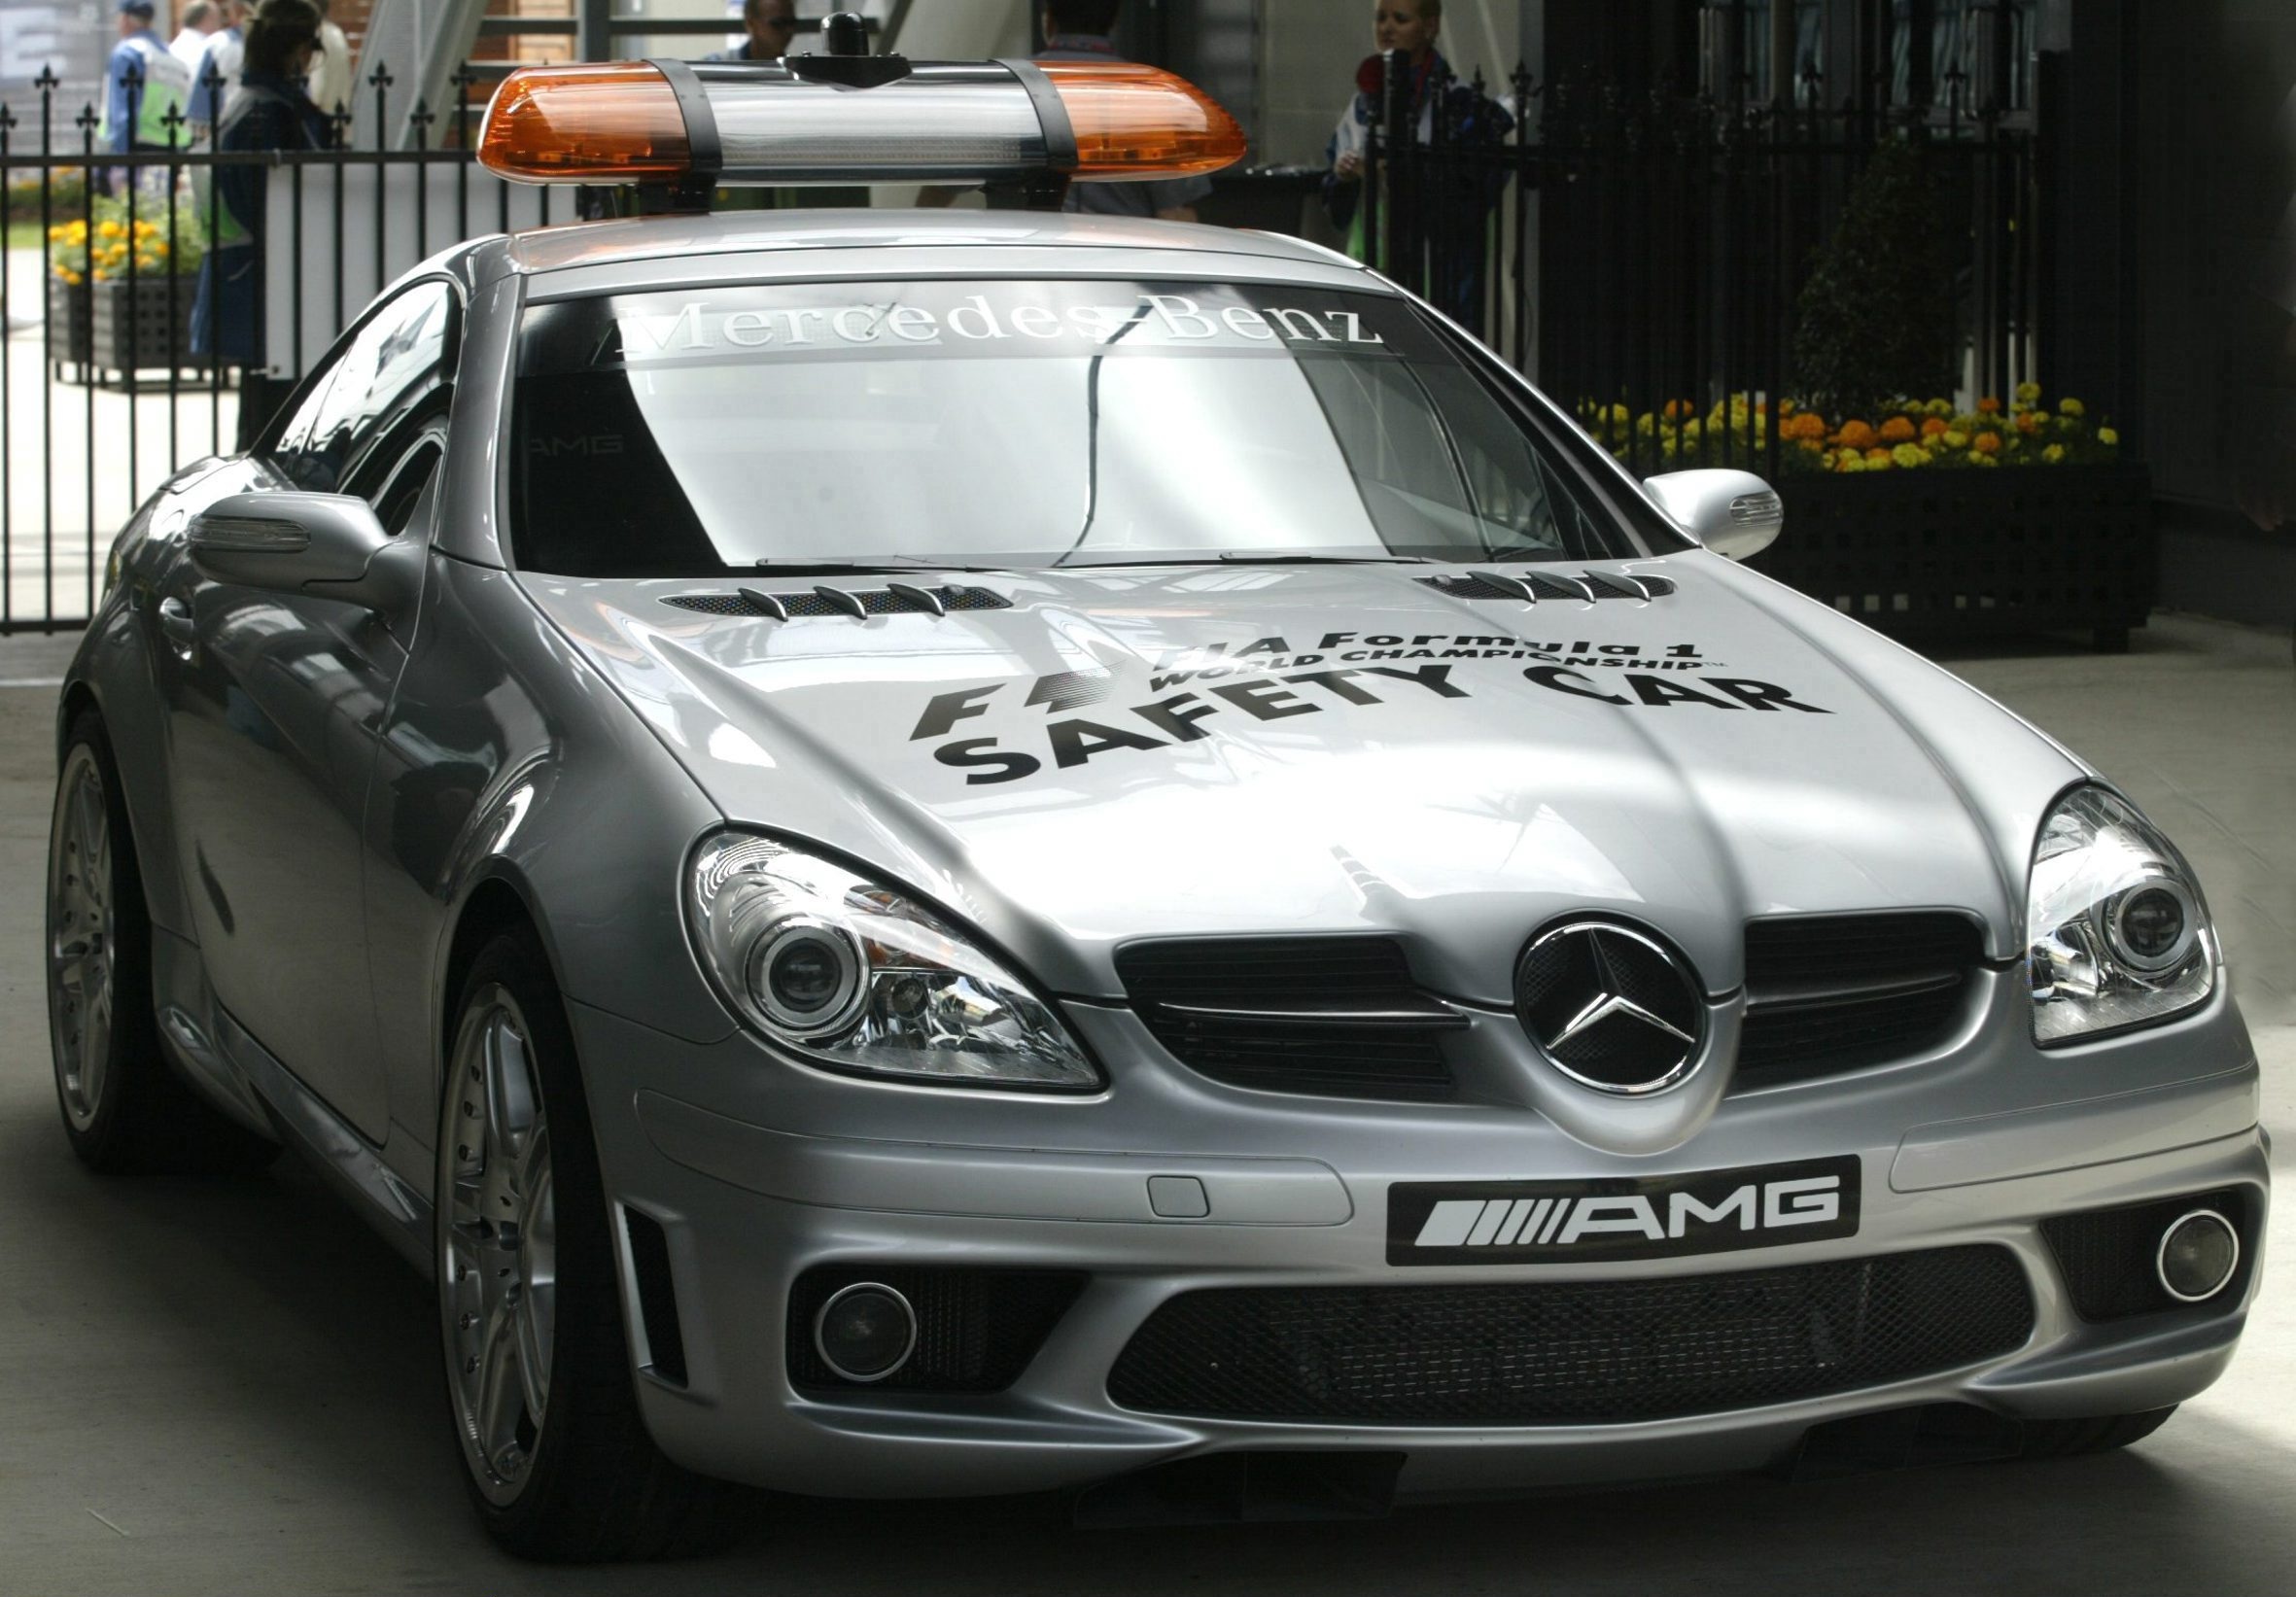 A silver Mercedes SLK55 AMG pace car at the Formula 1 Australian Grand Prix